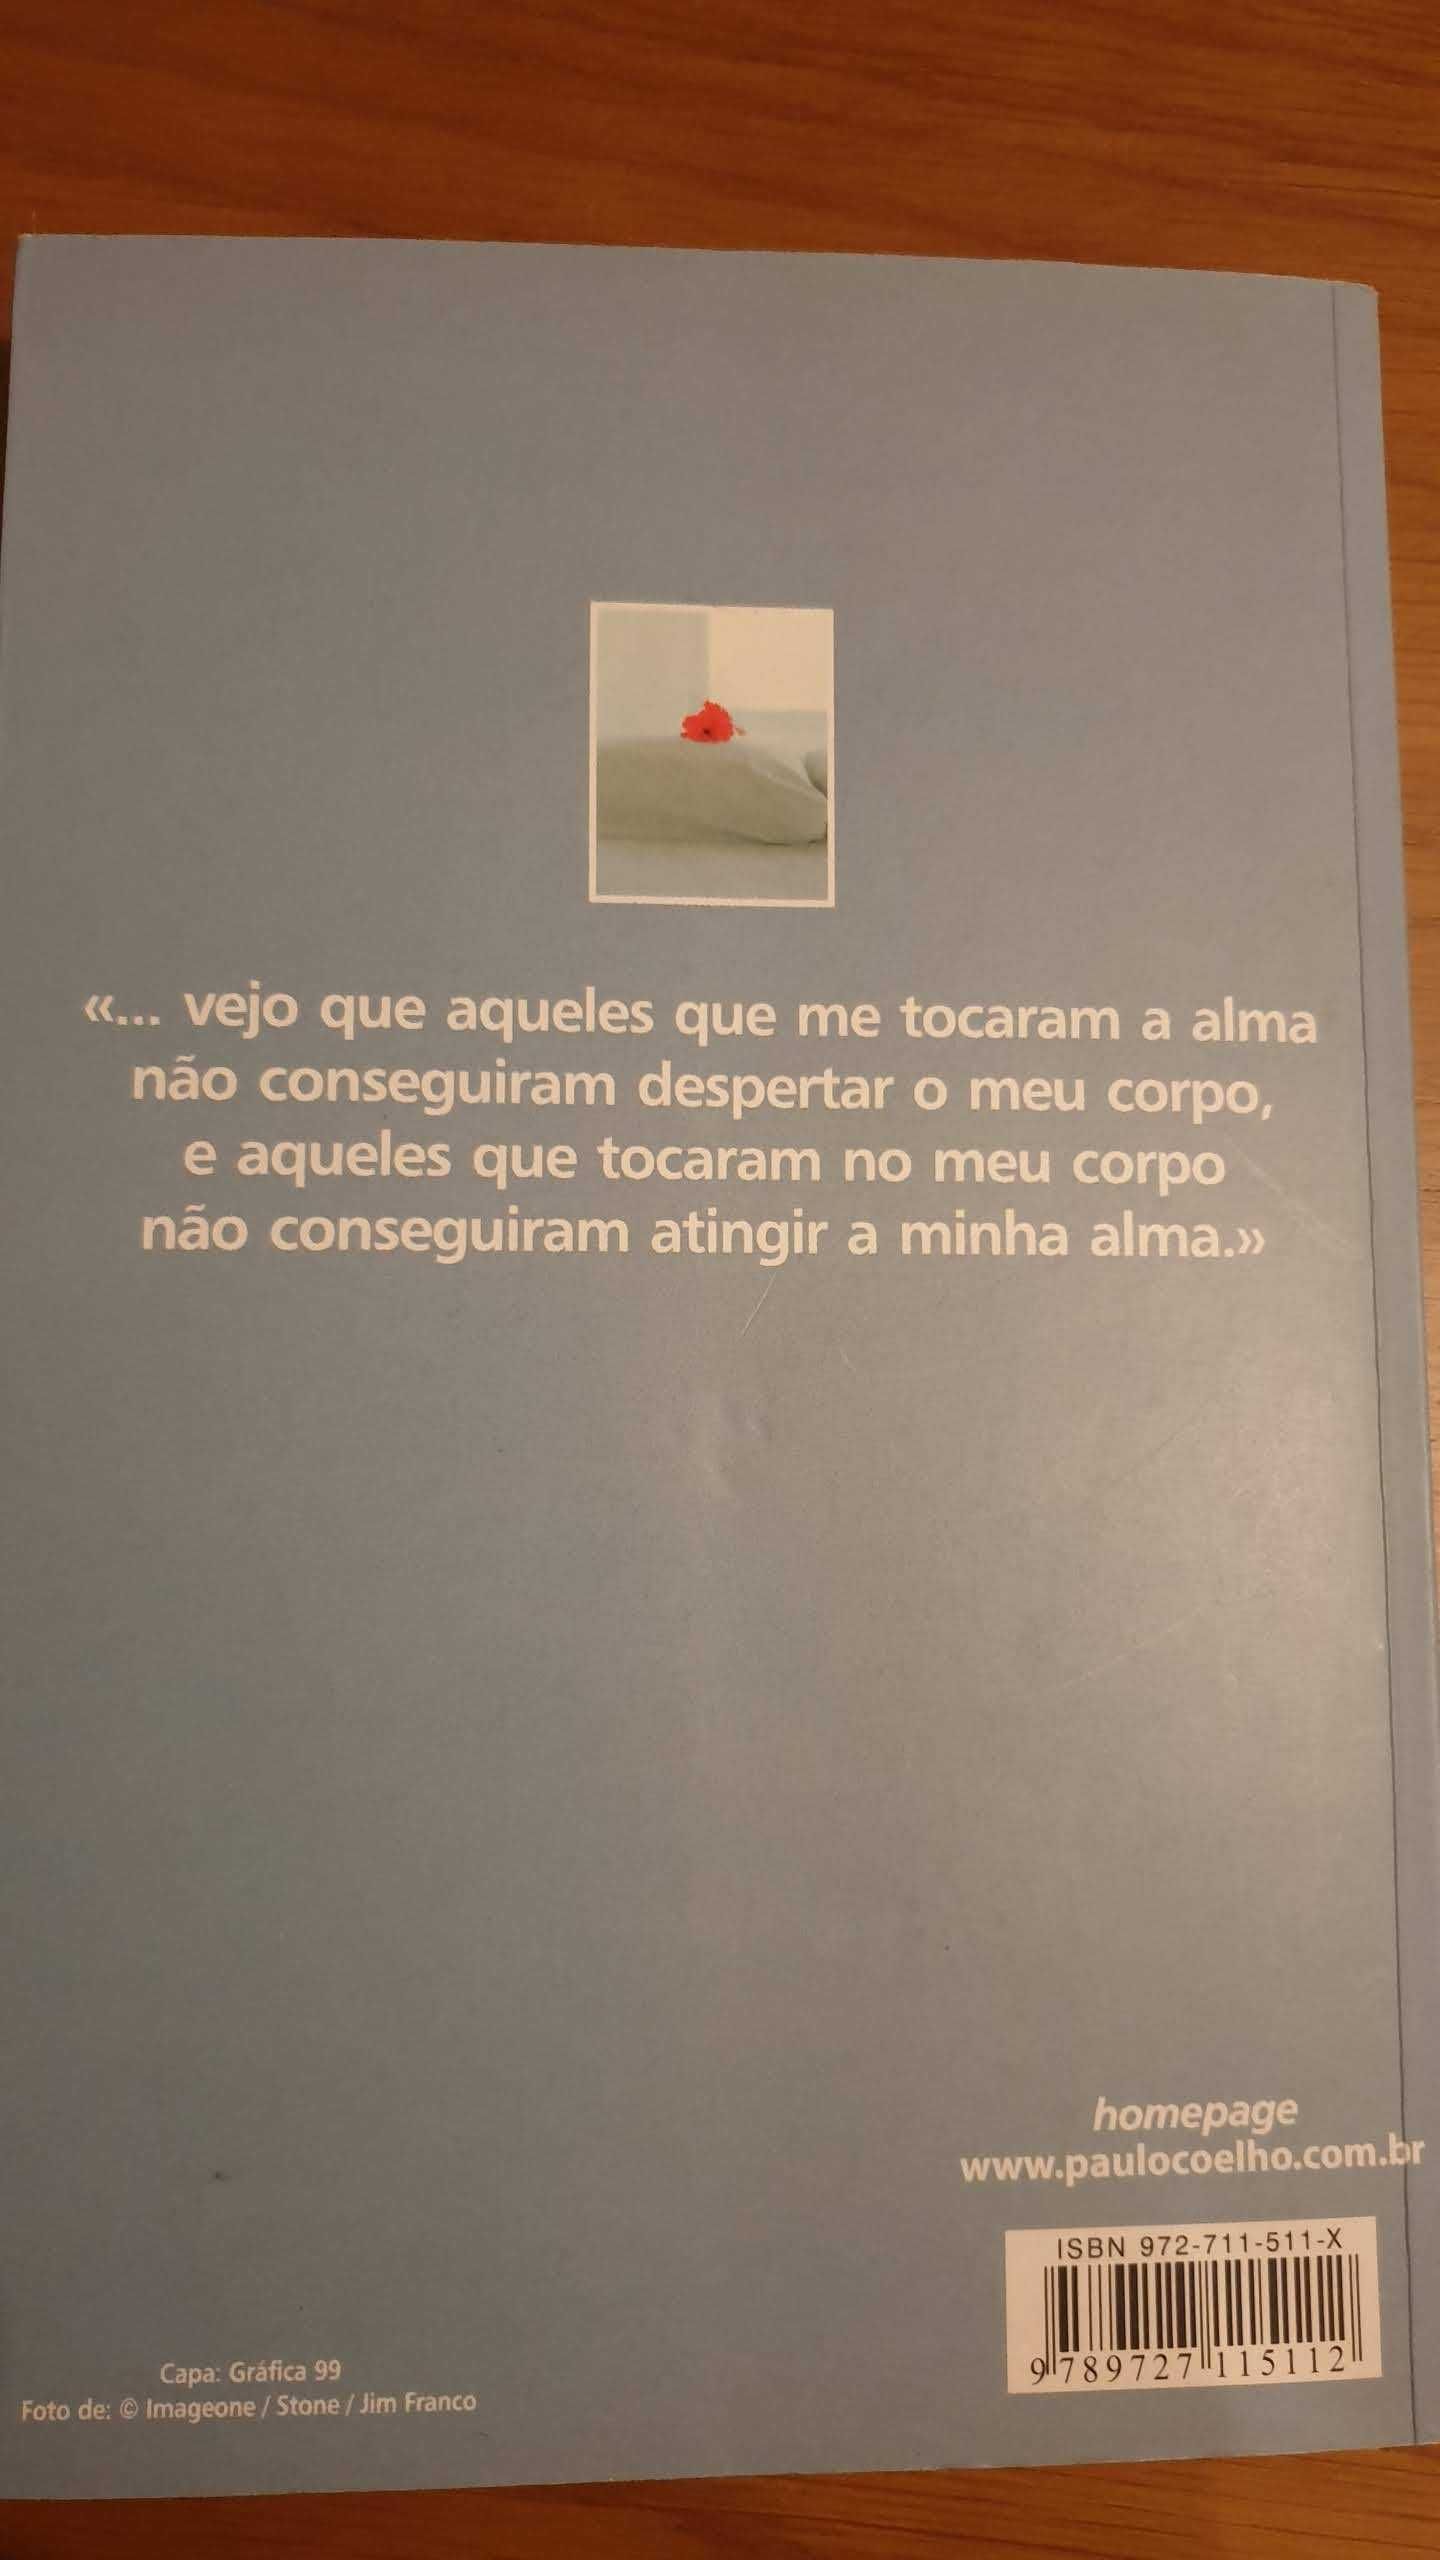 Paulo Coelho - 11 minutos